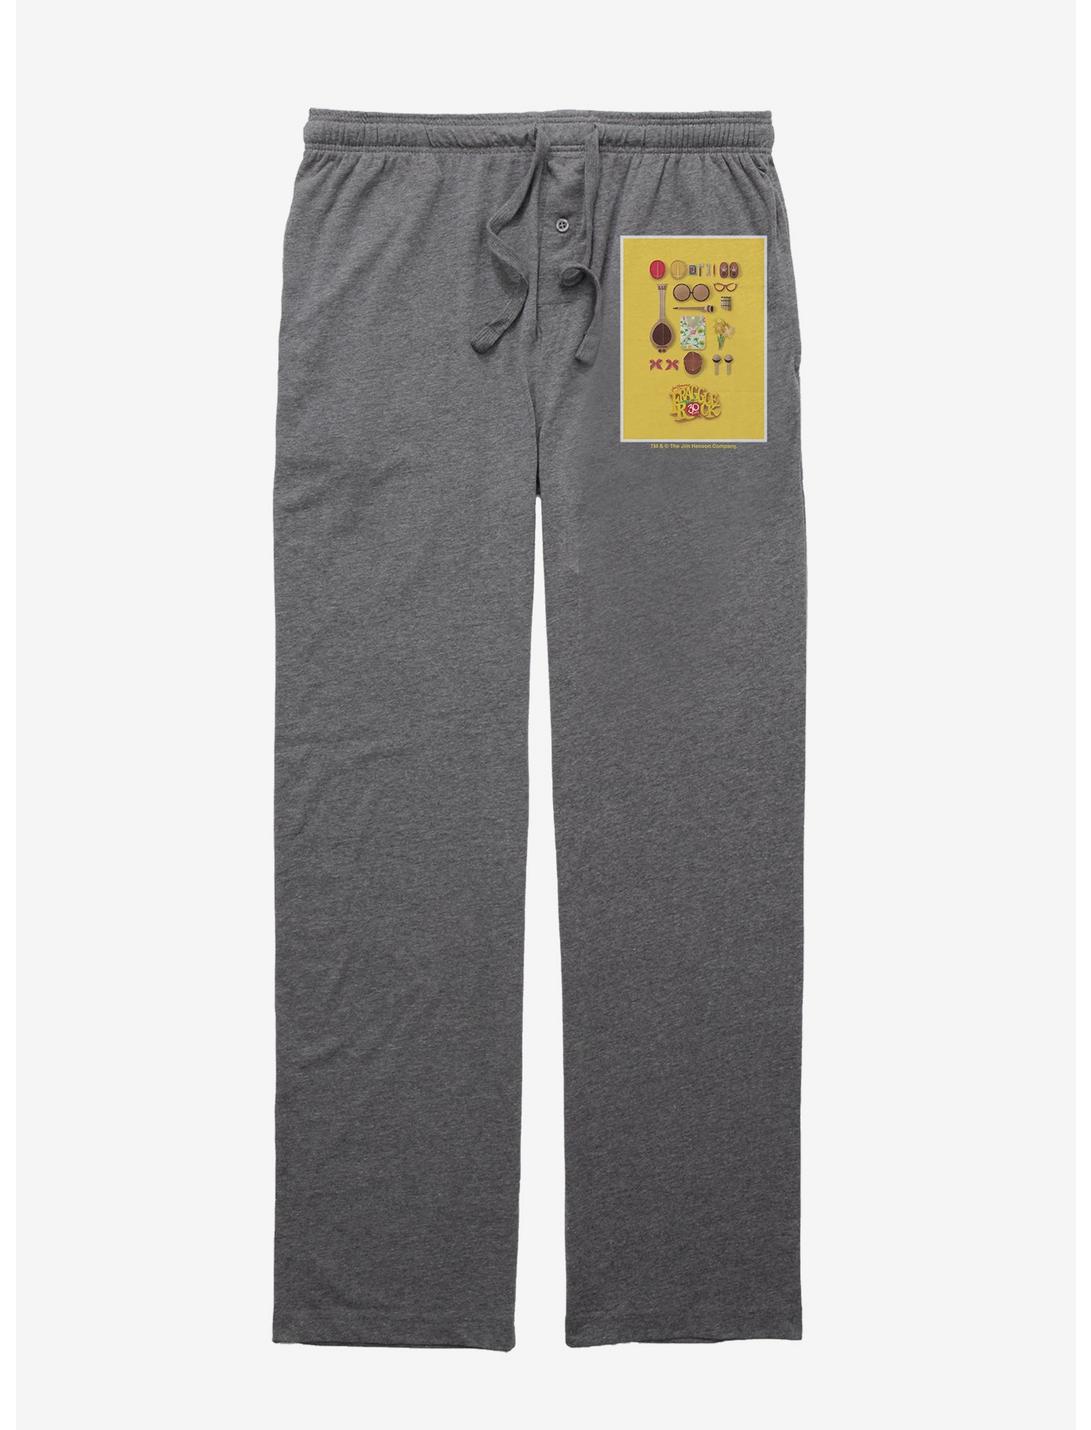 Jim Henson's Fraggle Rock 30 Years Pajama Pants, GRAPHITE HEATHER, hi-res